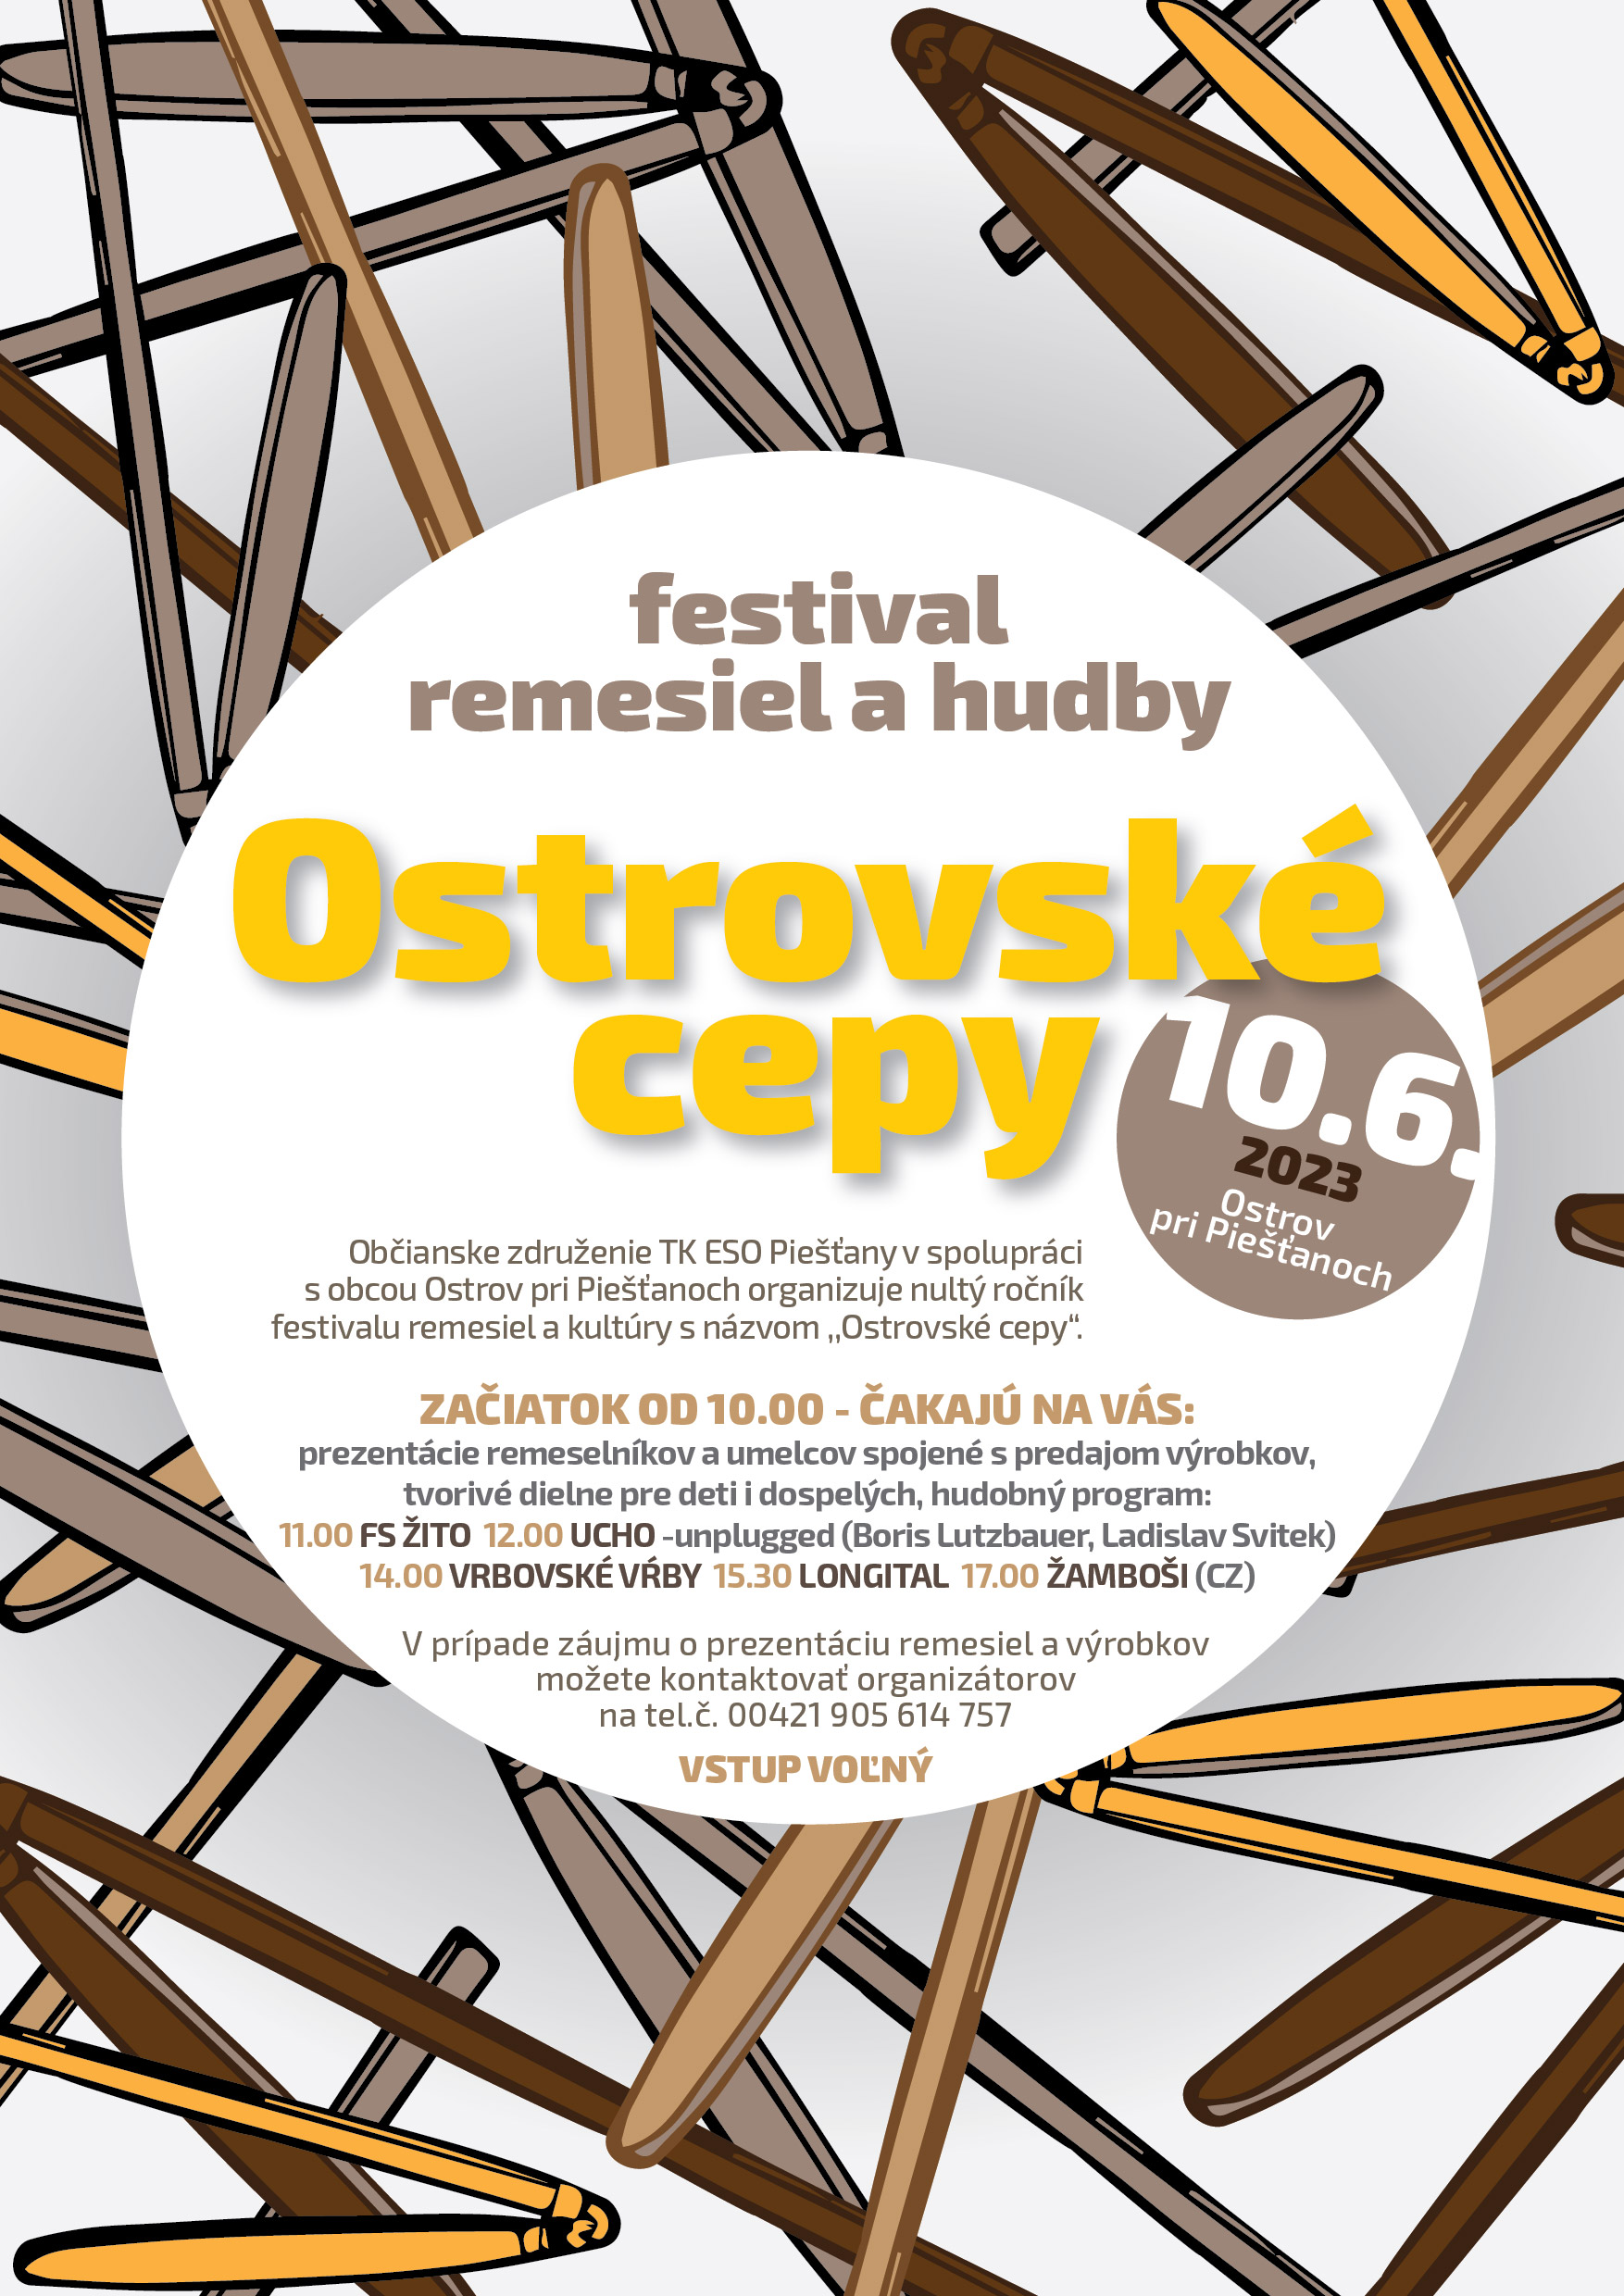 Ostrovsk cepy 2023 Ostrov - 0. ronk festivalu remesiel a hudby